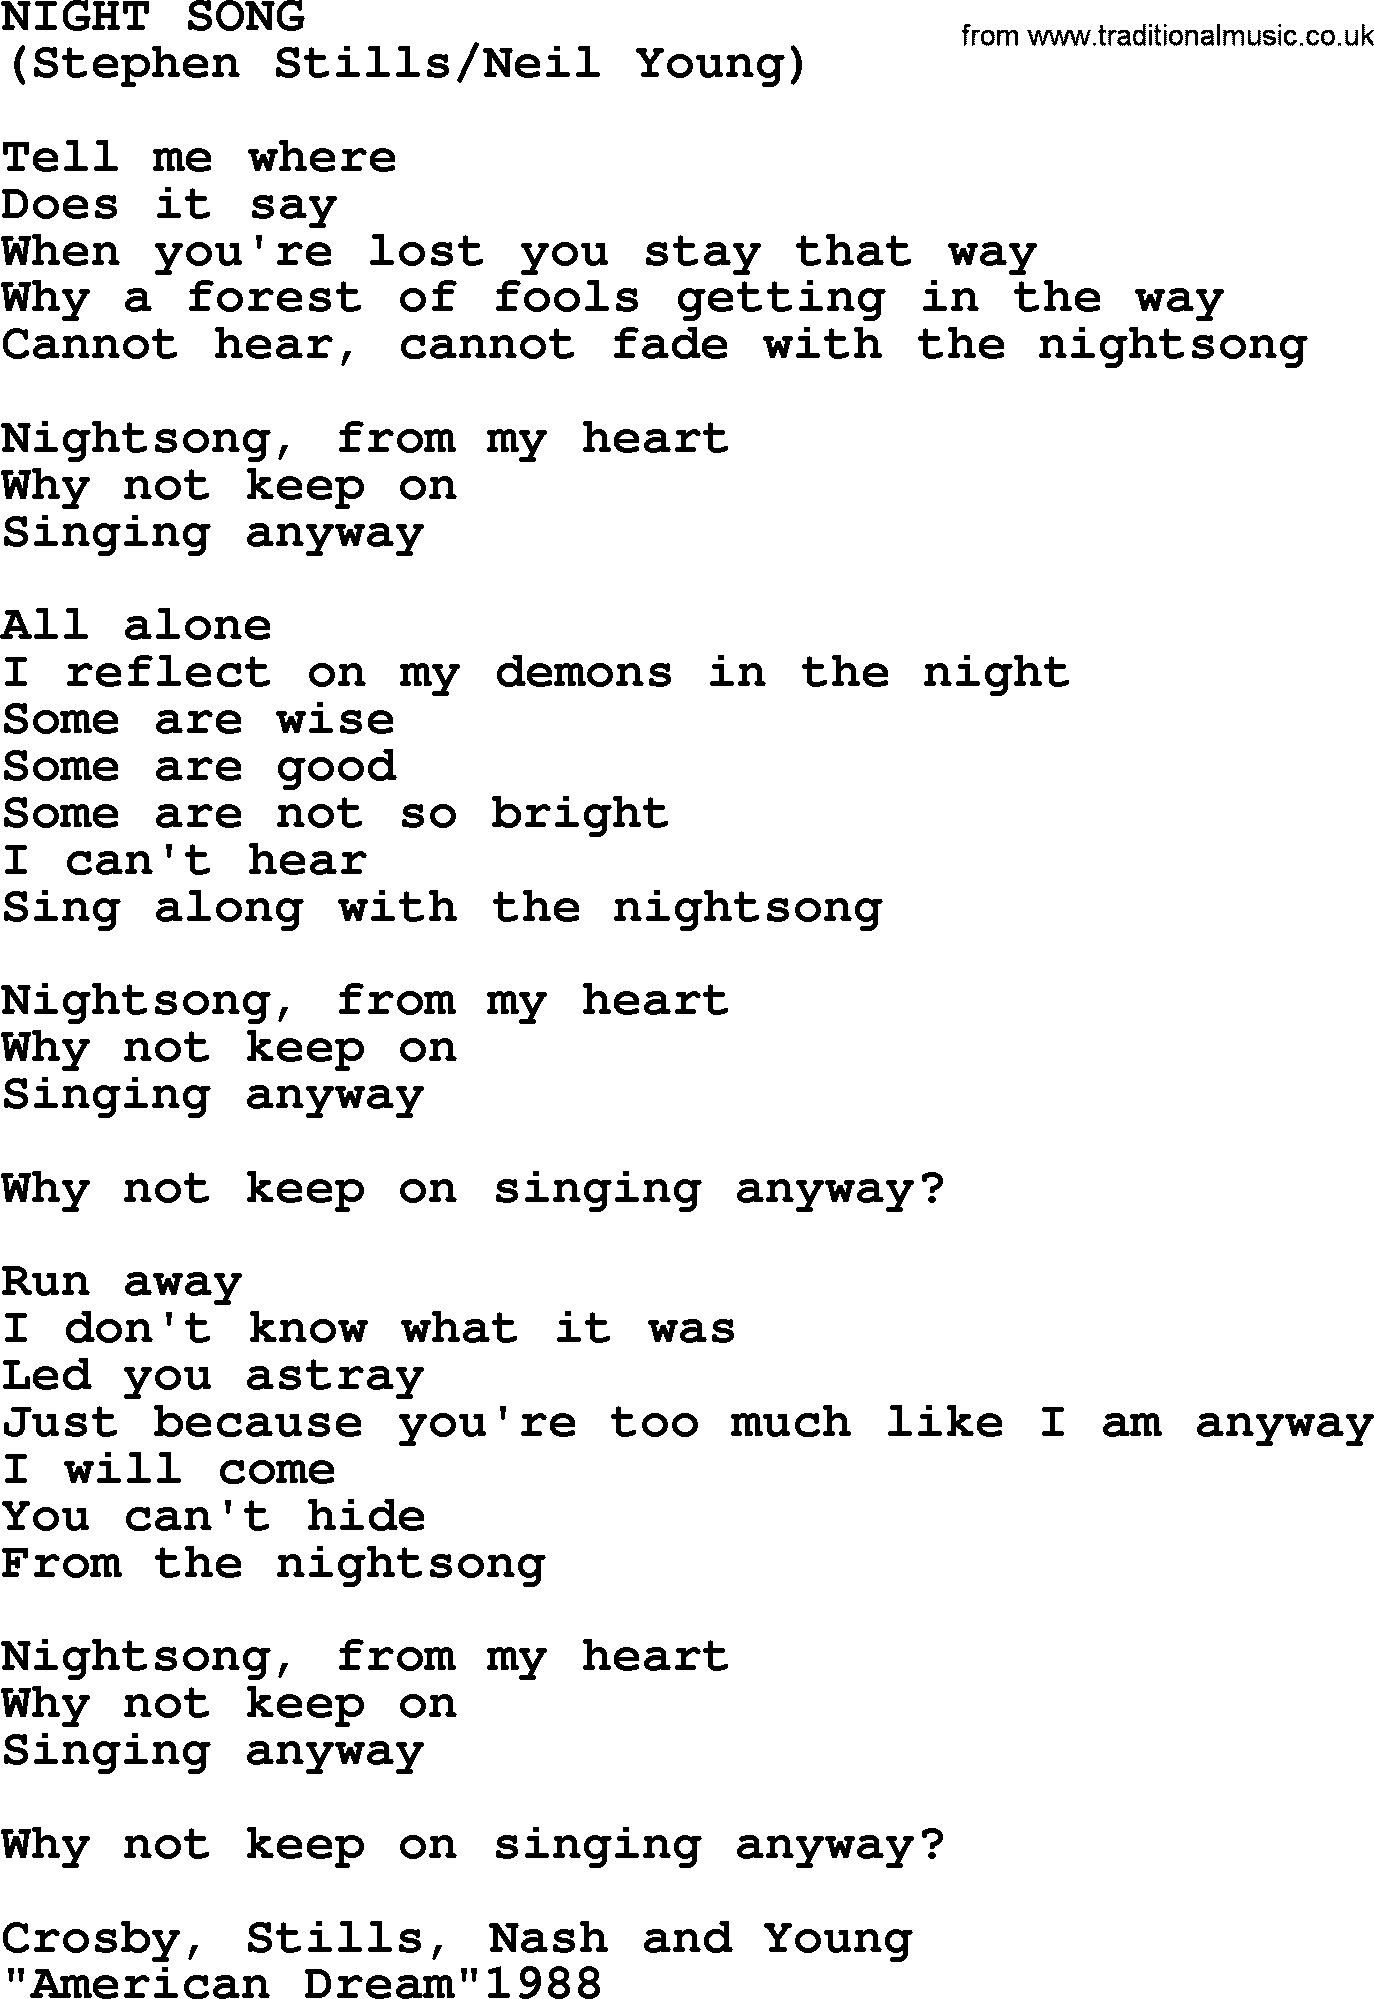 The Byrds song Night Song, lyrics